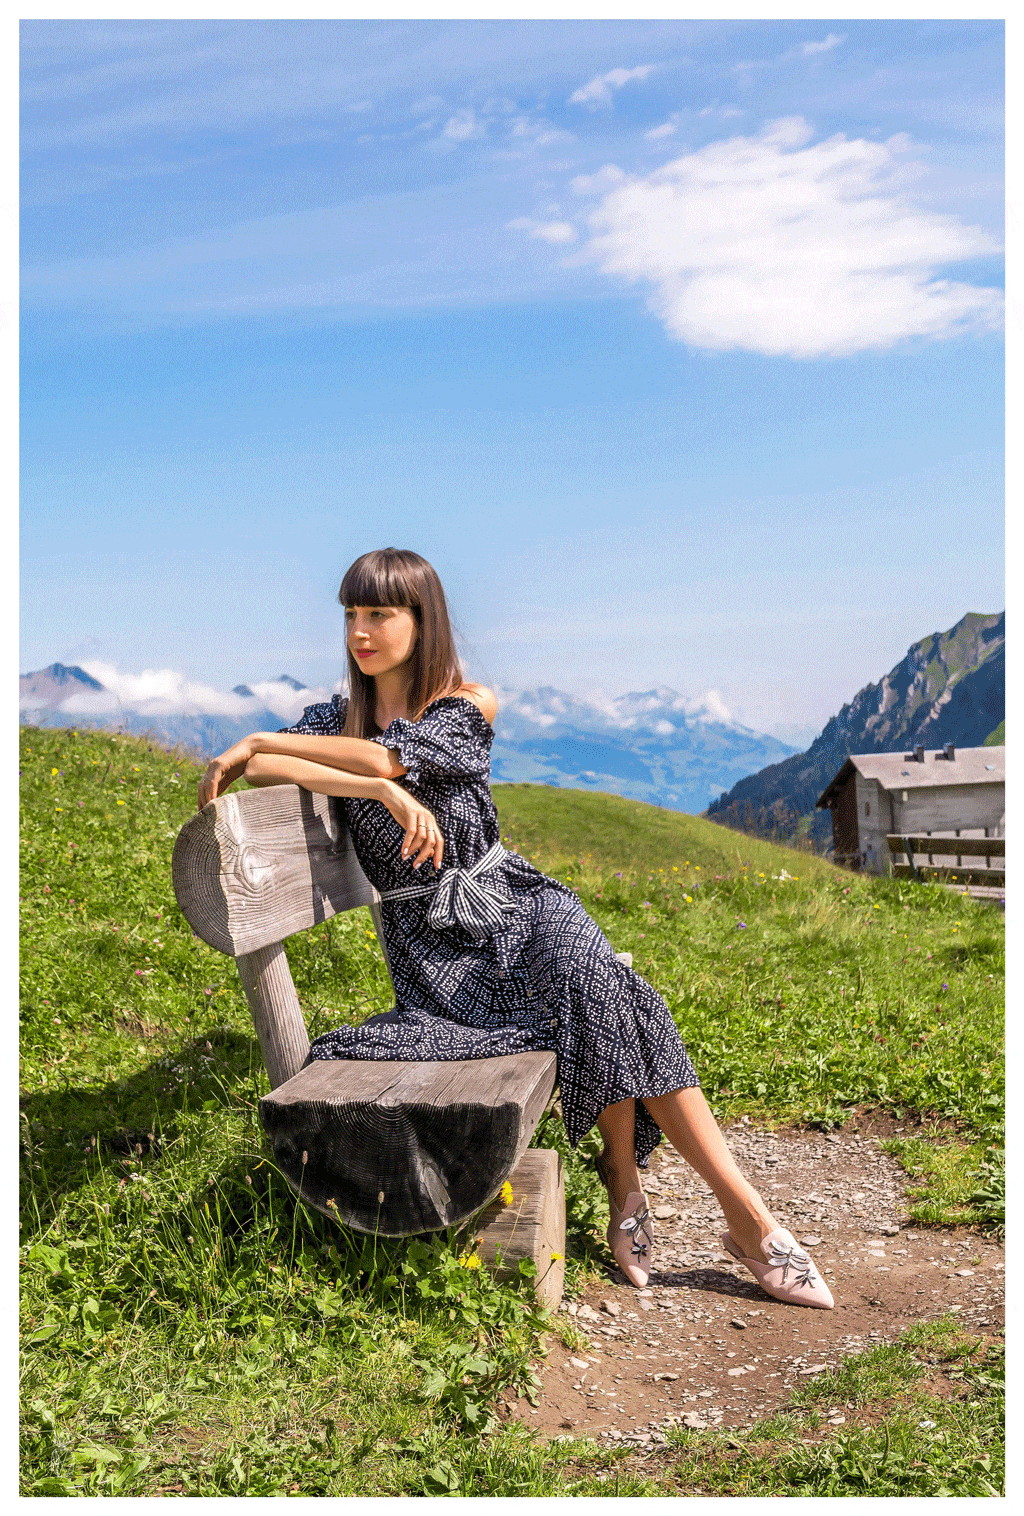 Adelboden Switzerland - a summer trip guide in the Swiss Alps